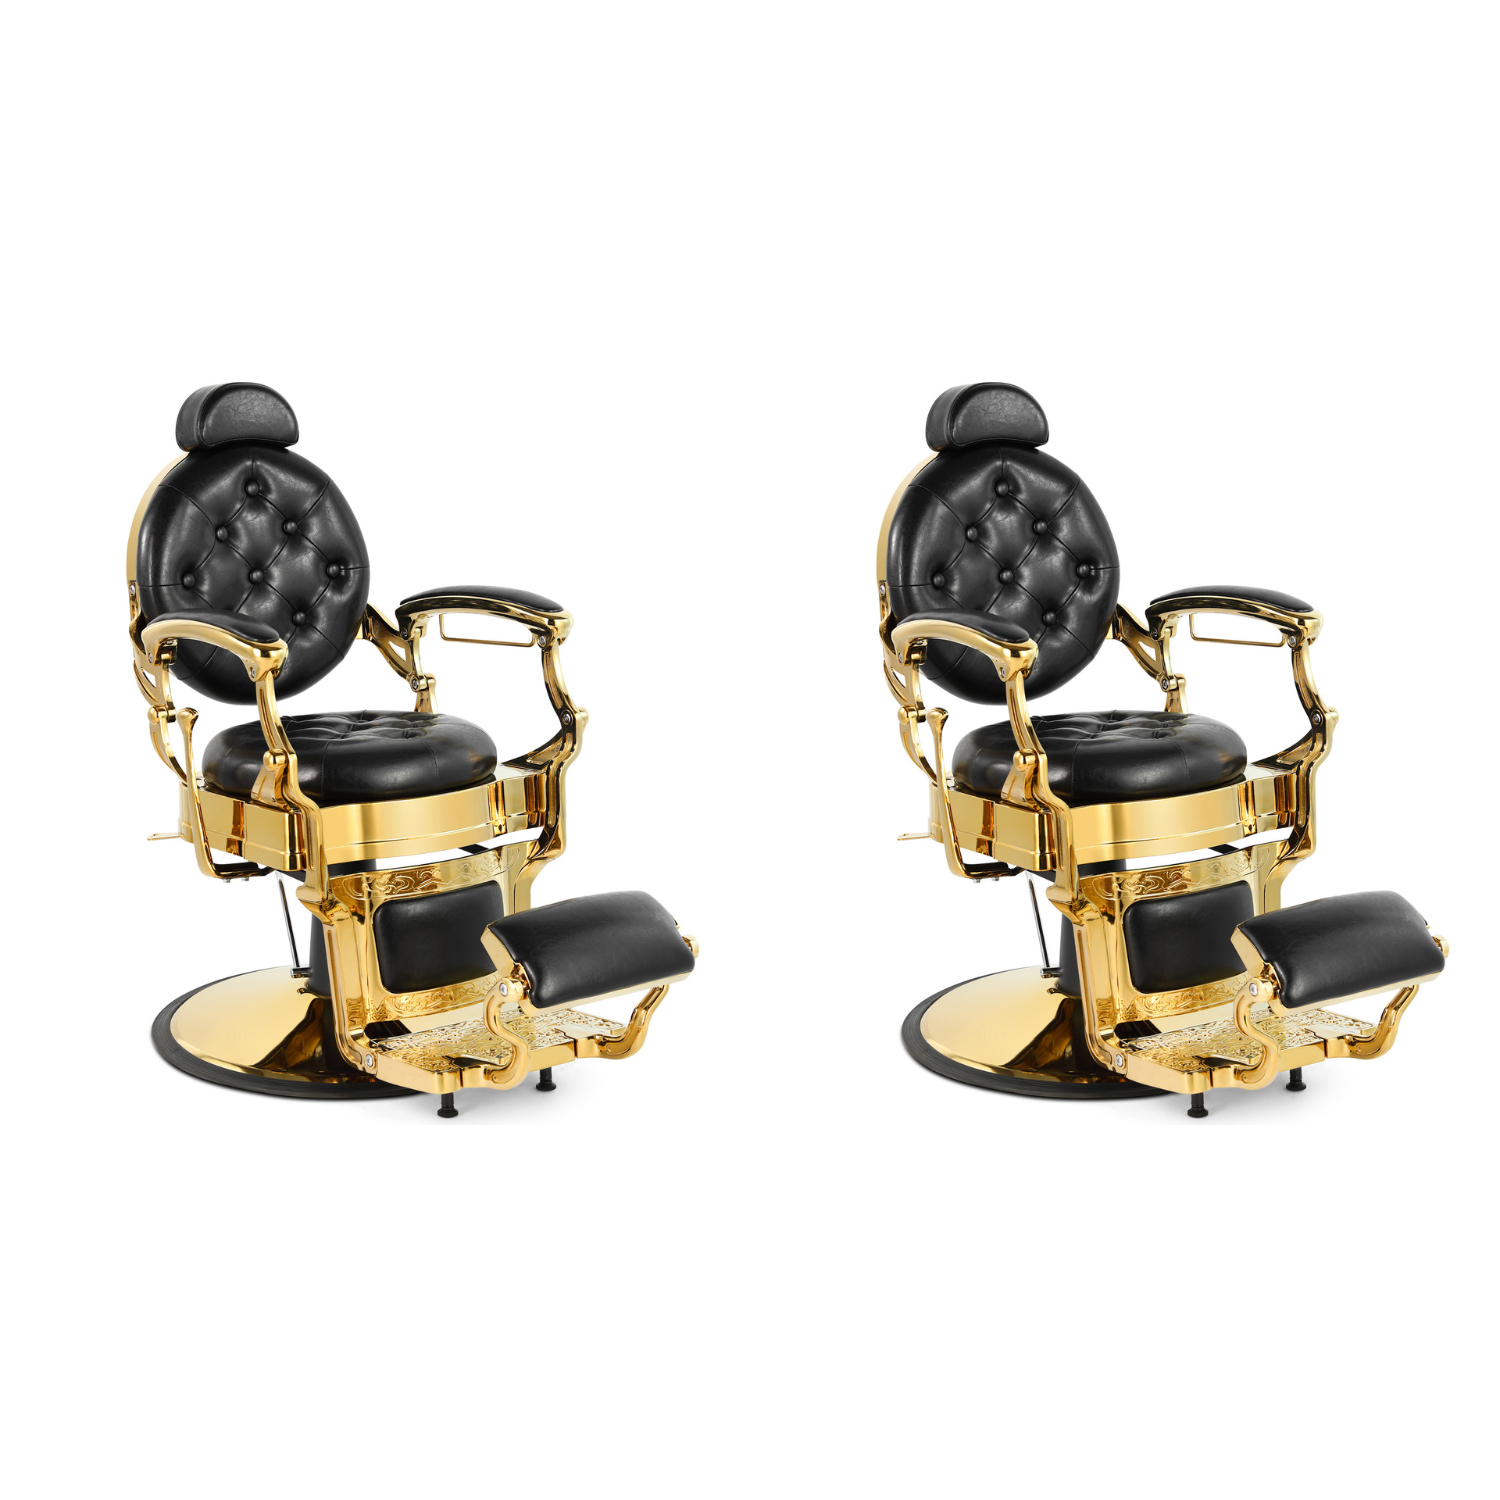 #5045 Retro Barber Chair Heavy Duty Vintage Salon Chair (Gold&Black)